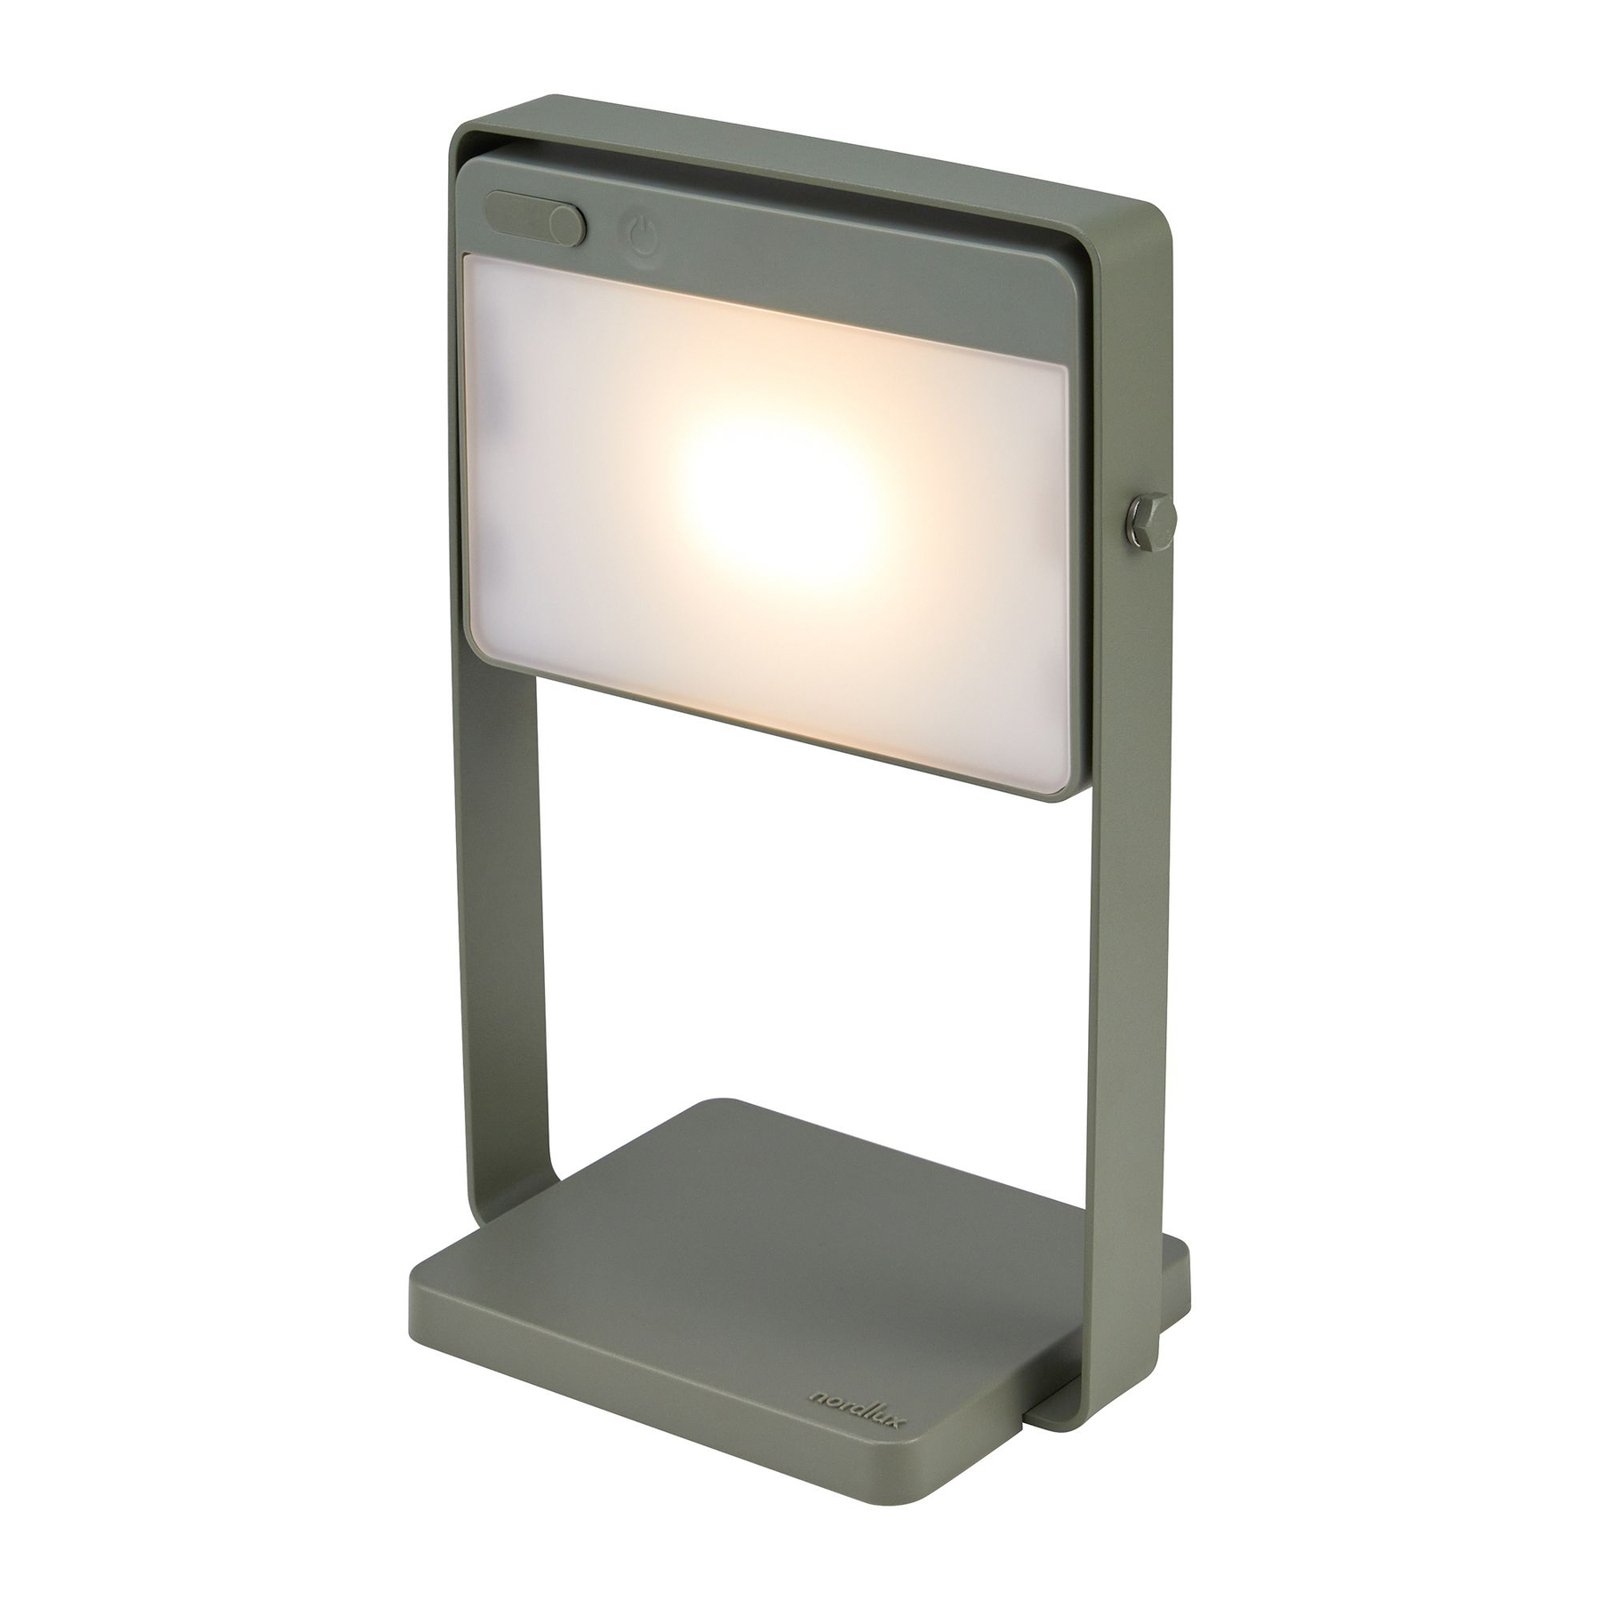 Saulio LED tafellamp op zonne-energie, olijfgroen, IP44, aluminium, USB,